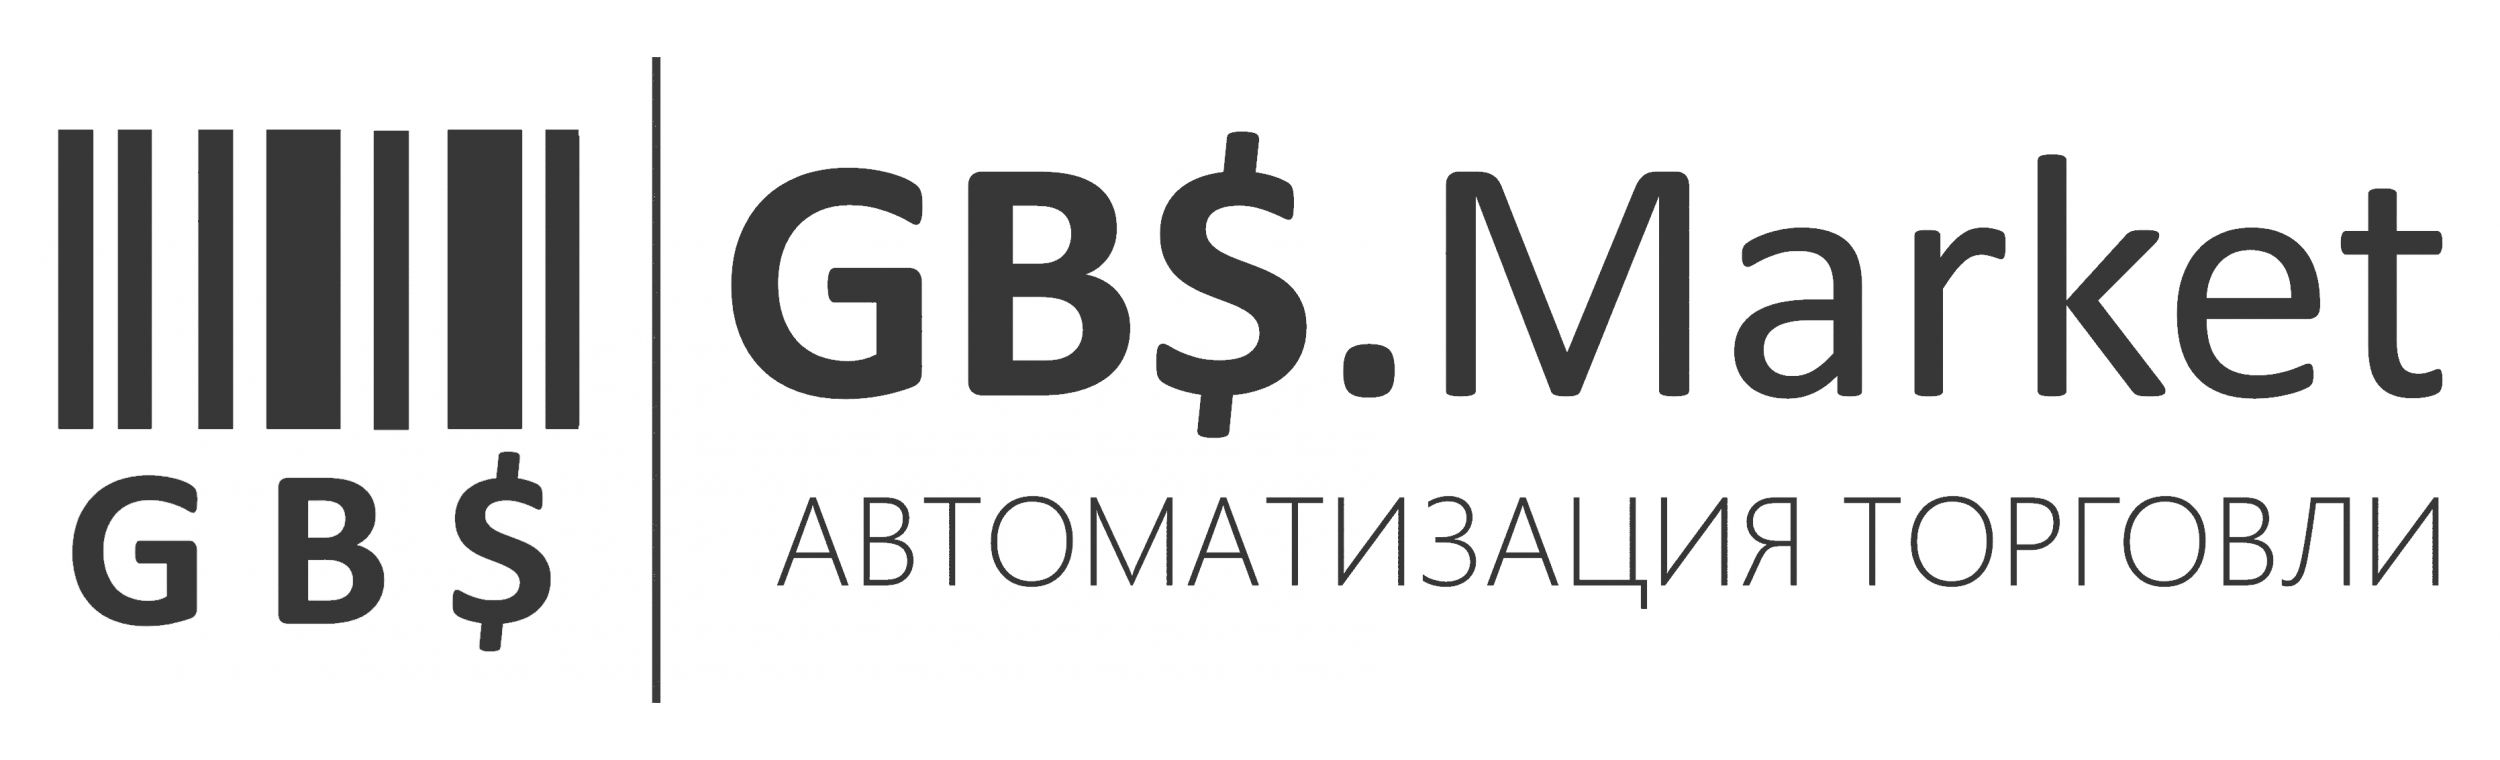 6 5 маркет. GBS Market. Горизонтальный логотип. GBS логотип. Маркет лого.